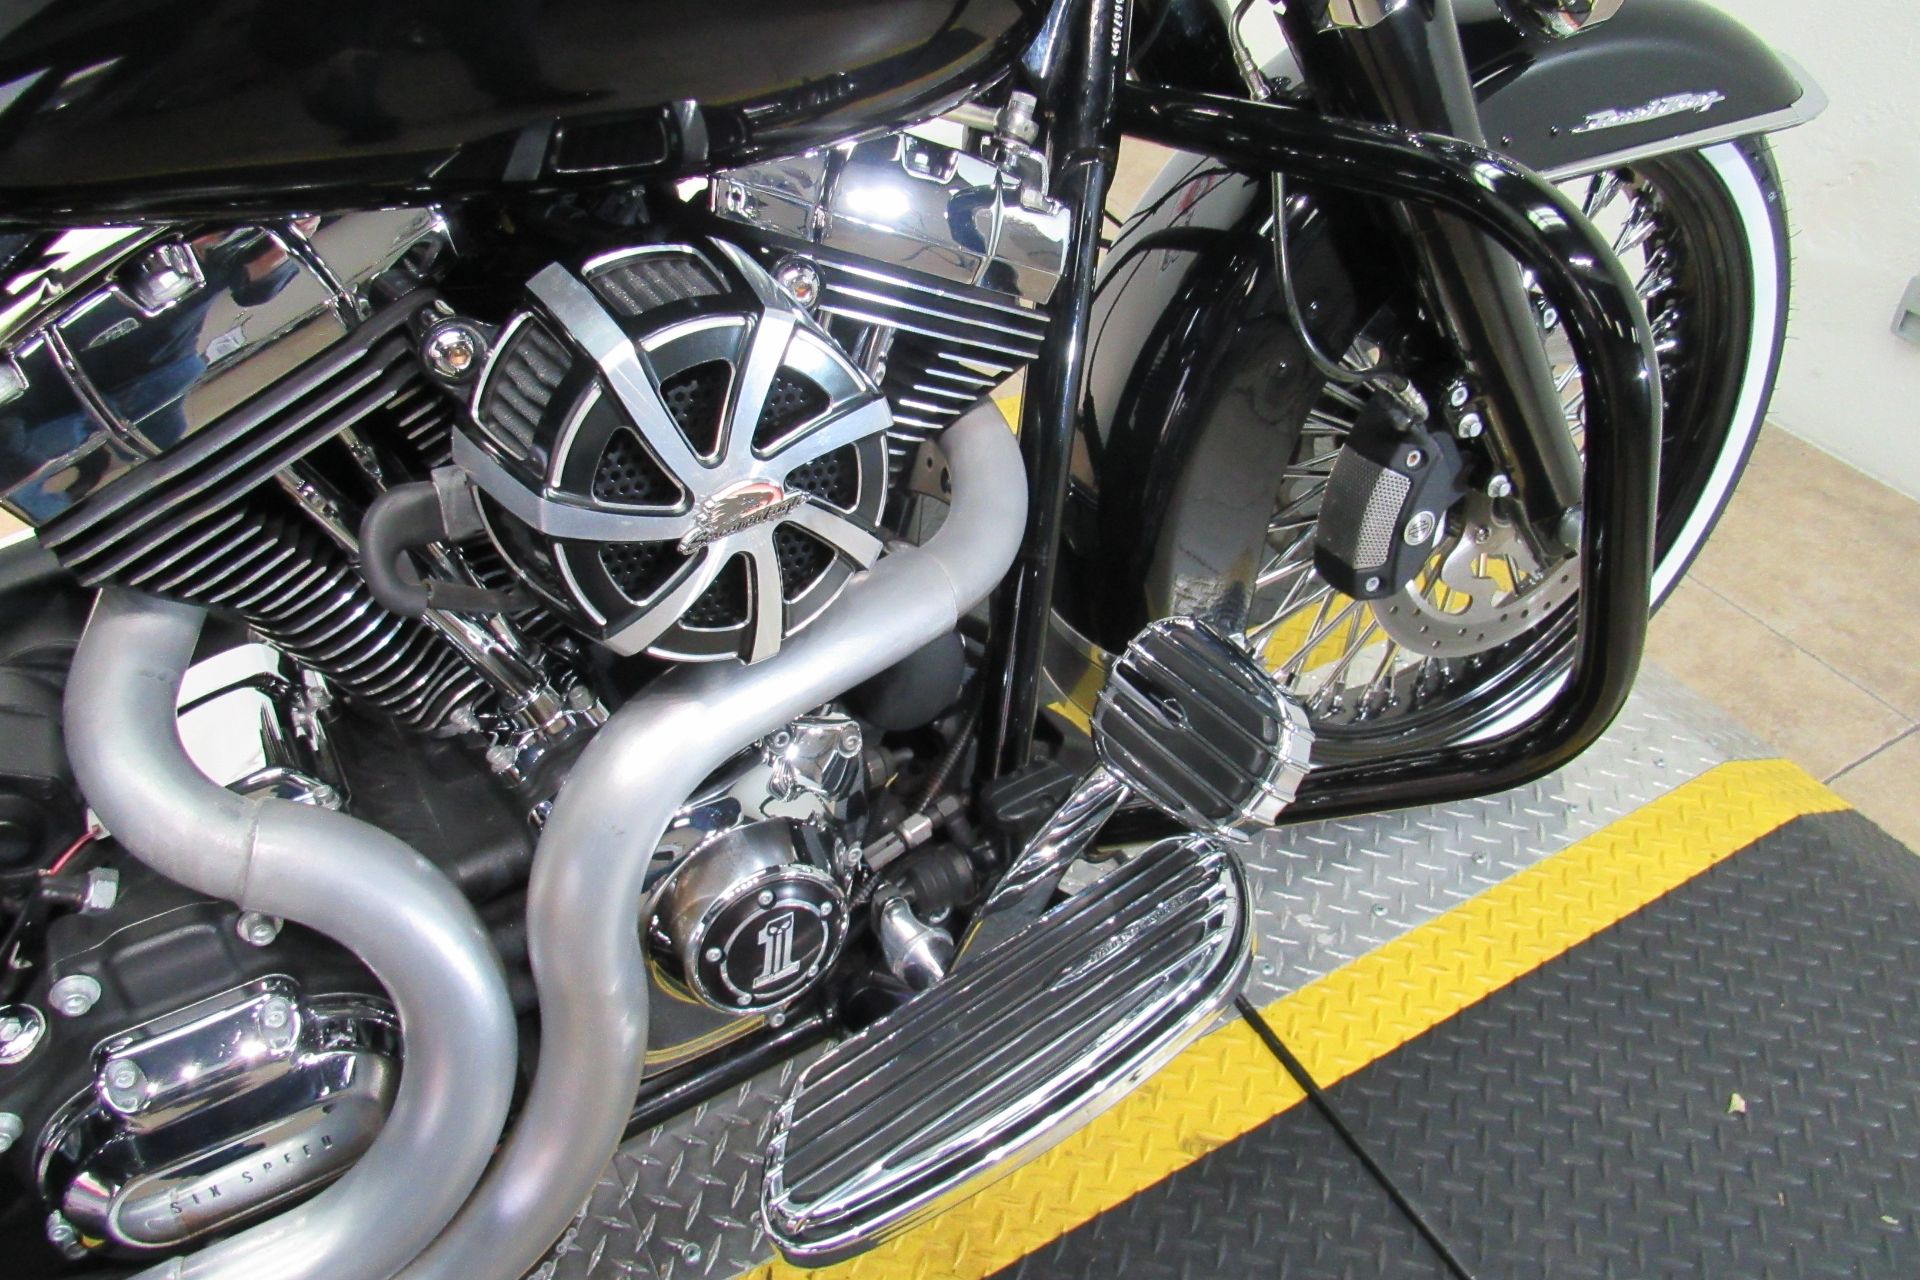 2014 Harley-Davidson Road King® in Temecula, California - Photo 15